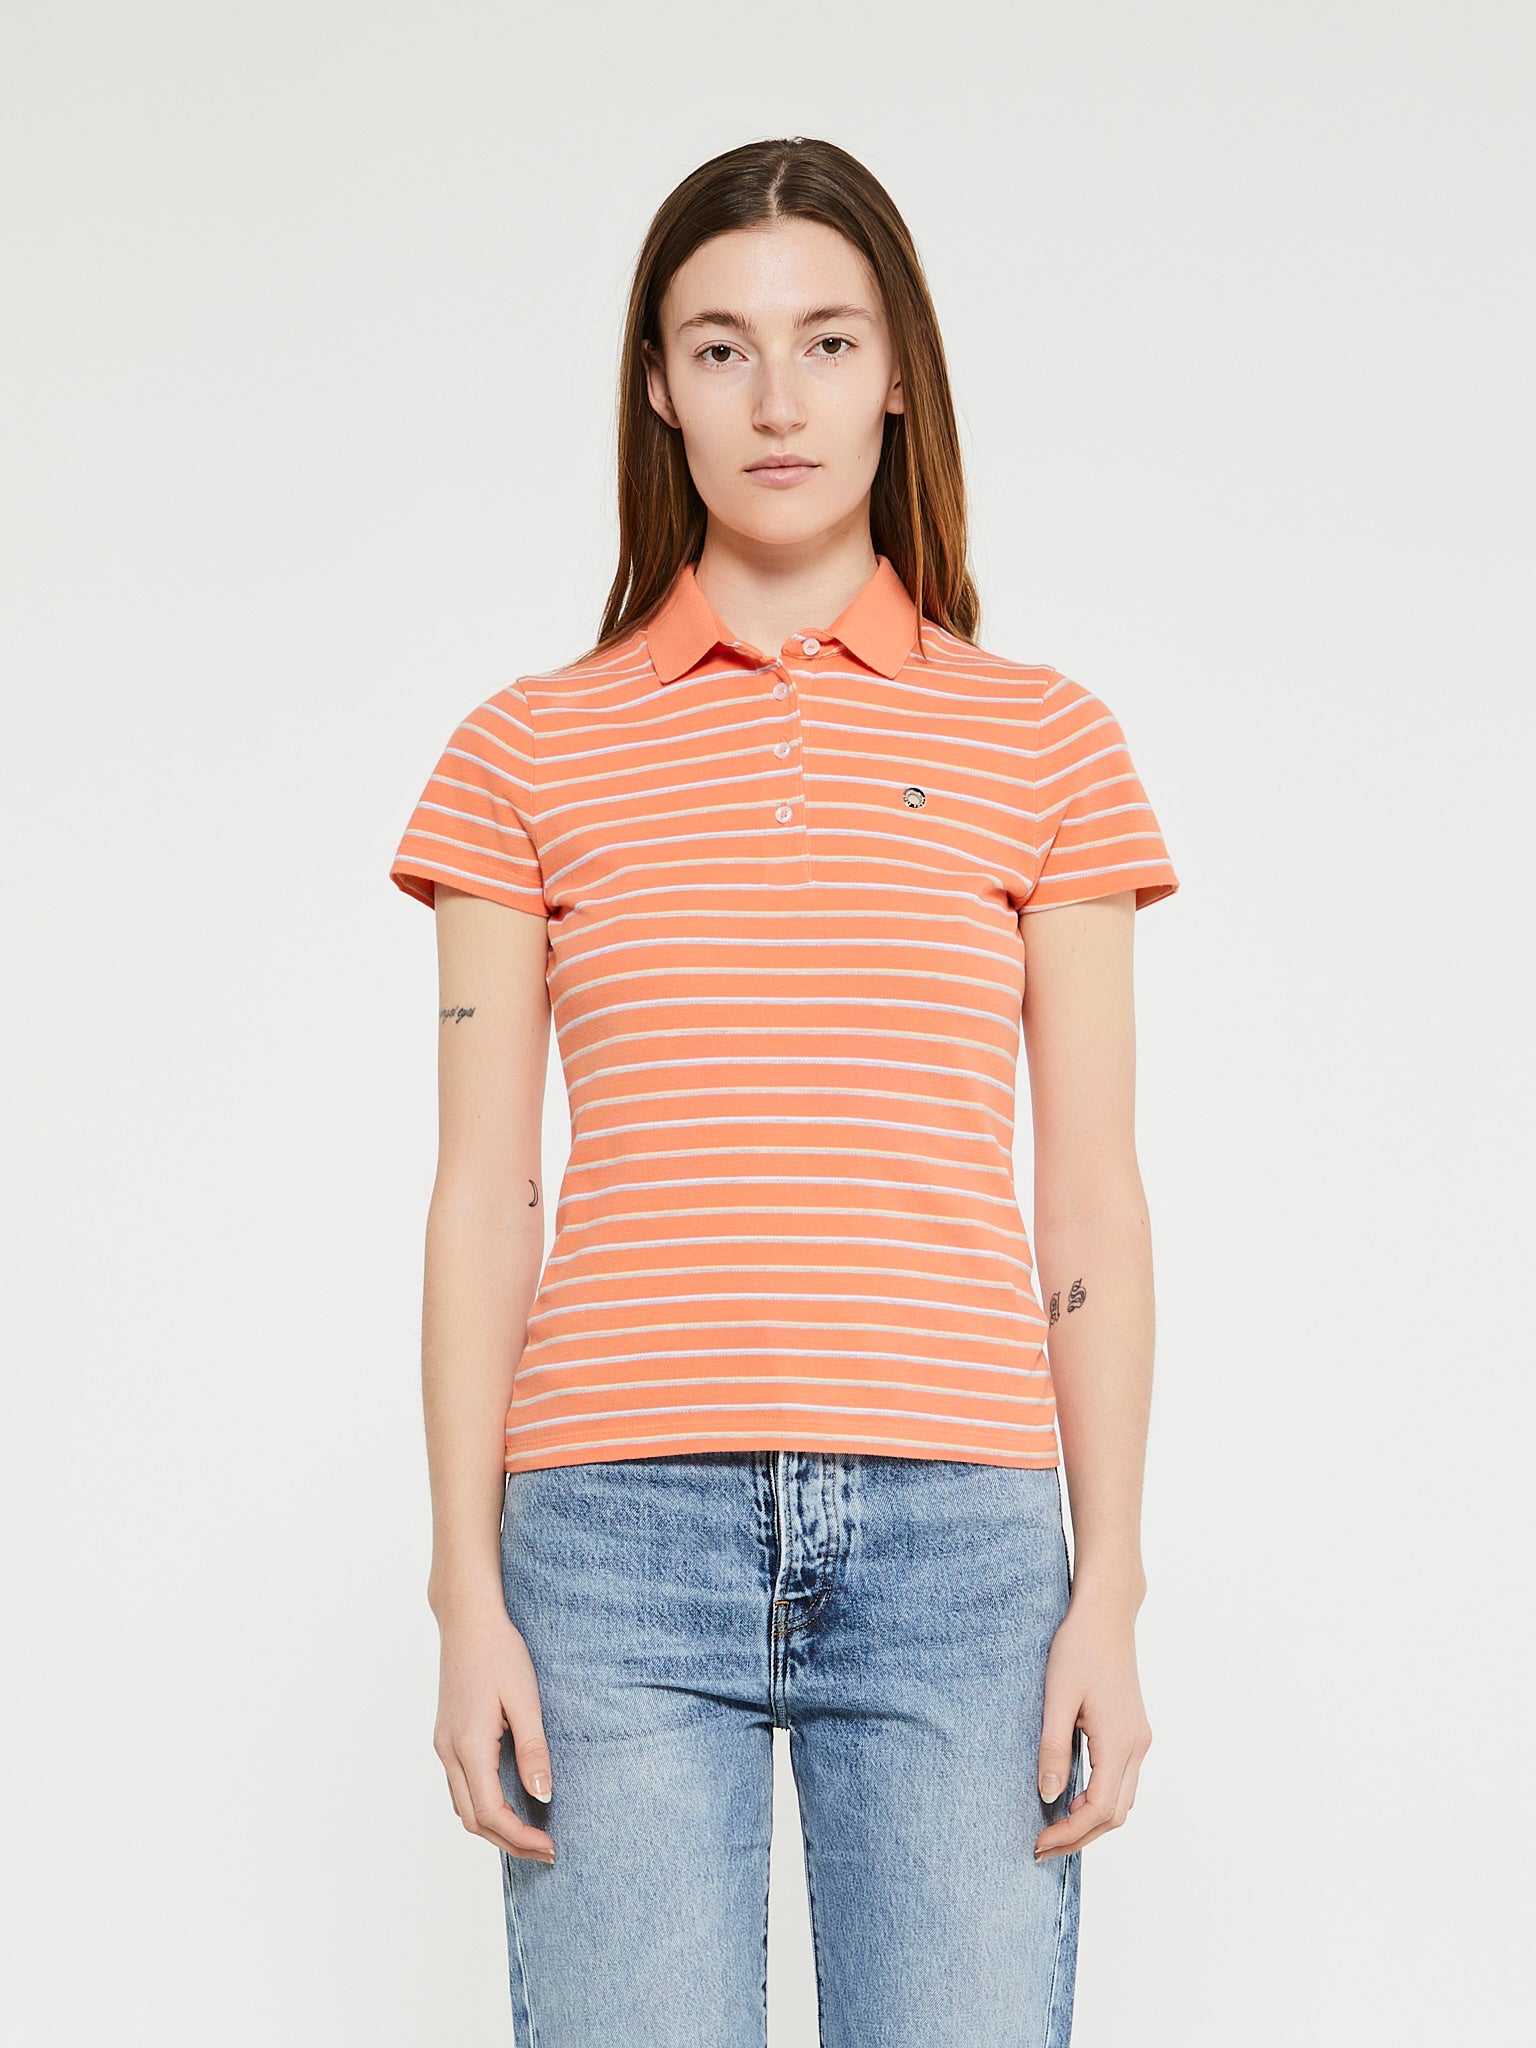 Saks Potts - Venus Polo Shirt in Melon Stripe